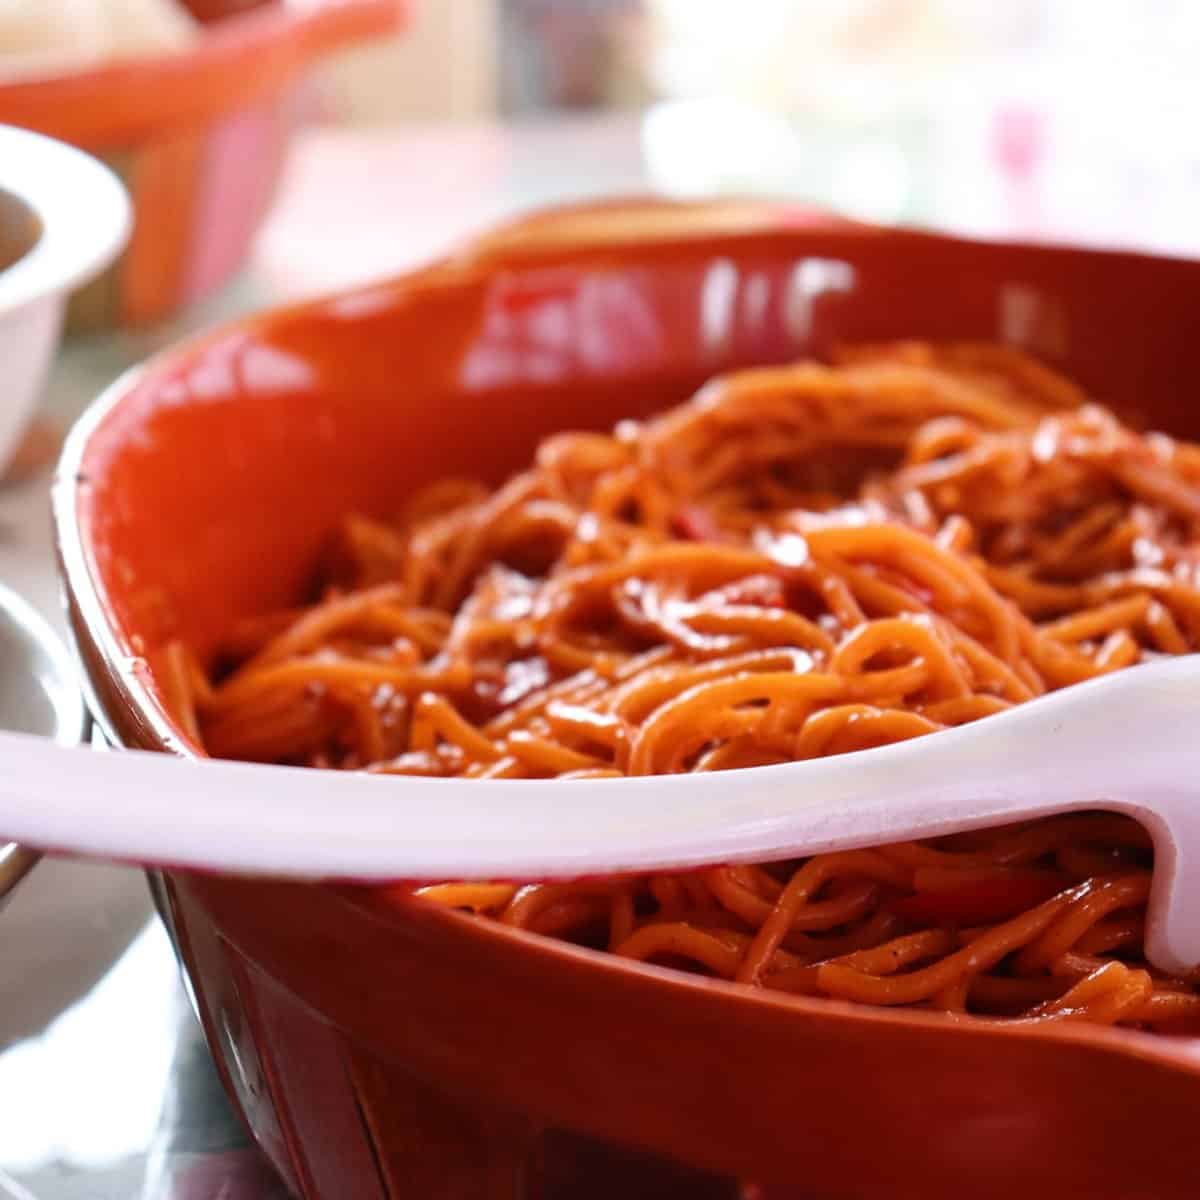 What is filipino spaghetti